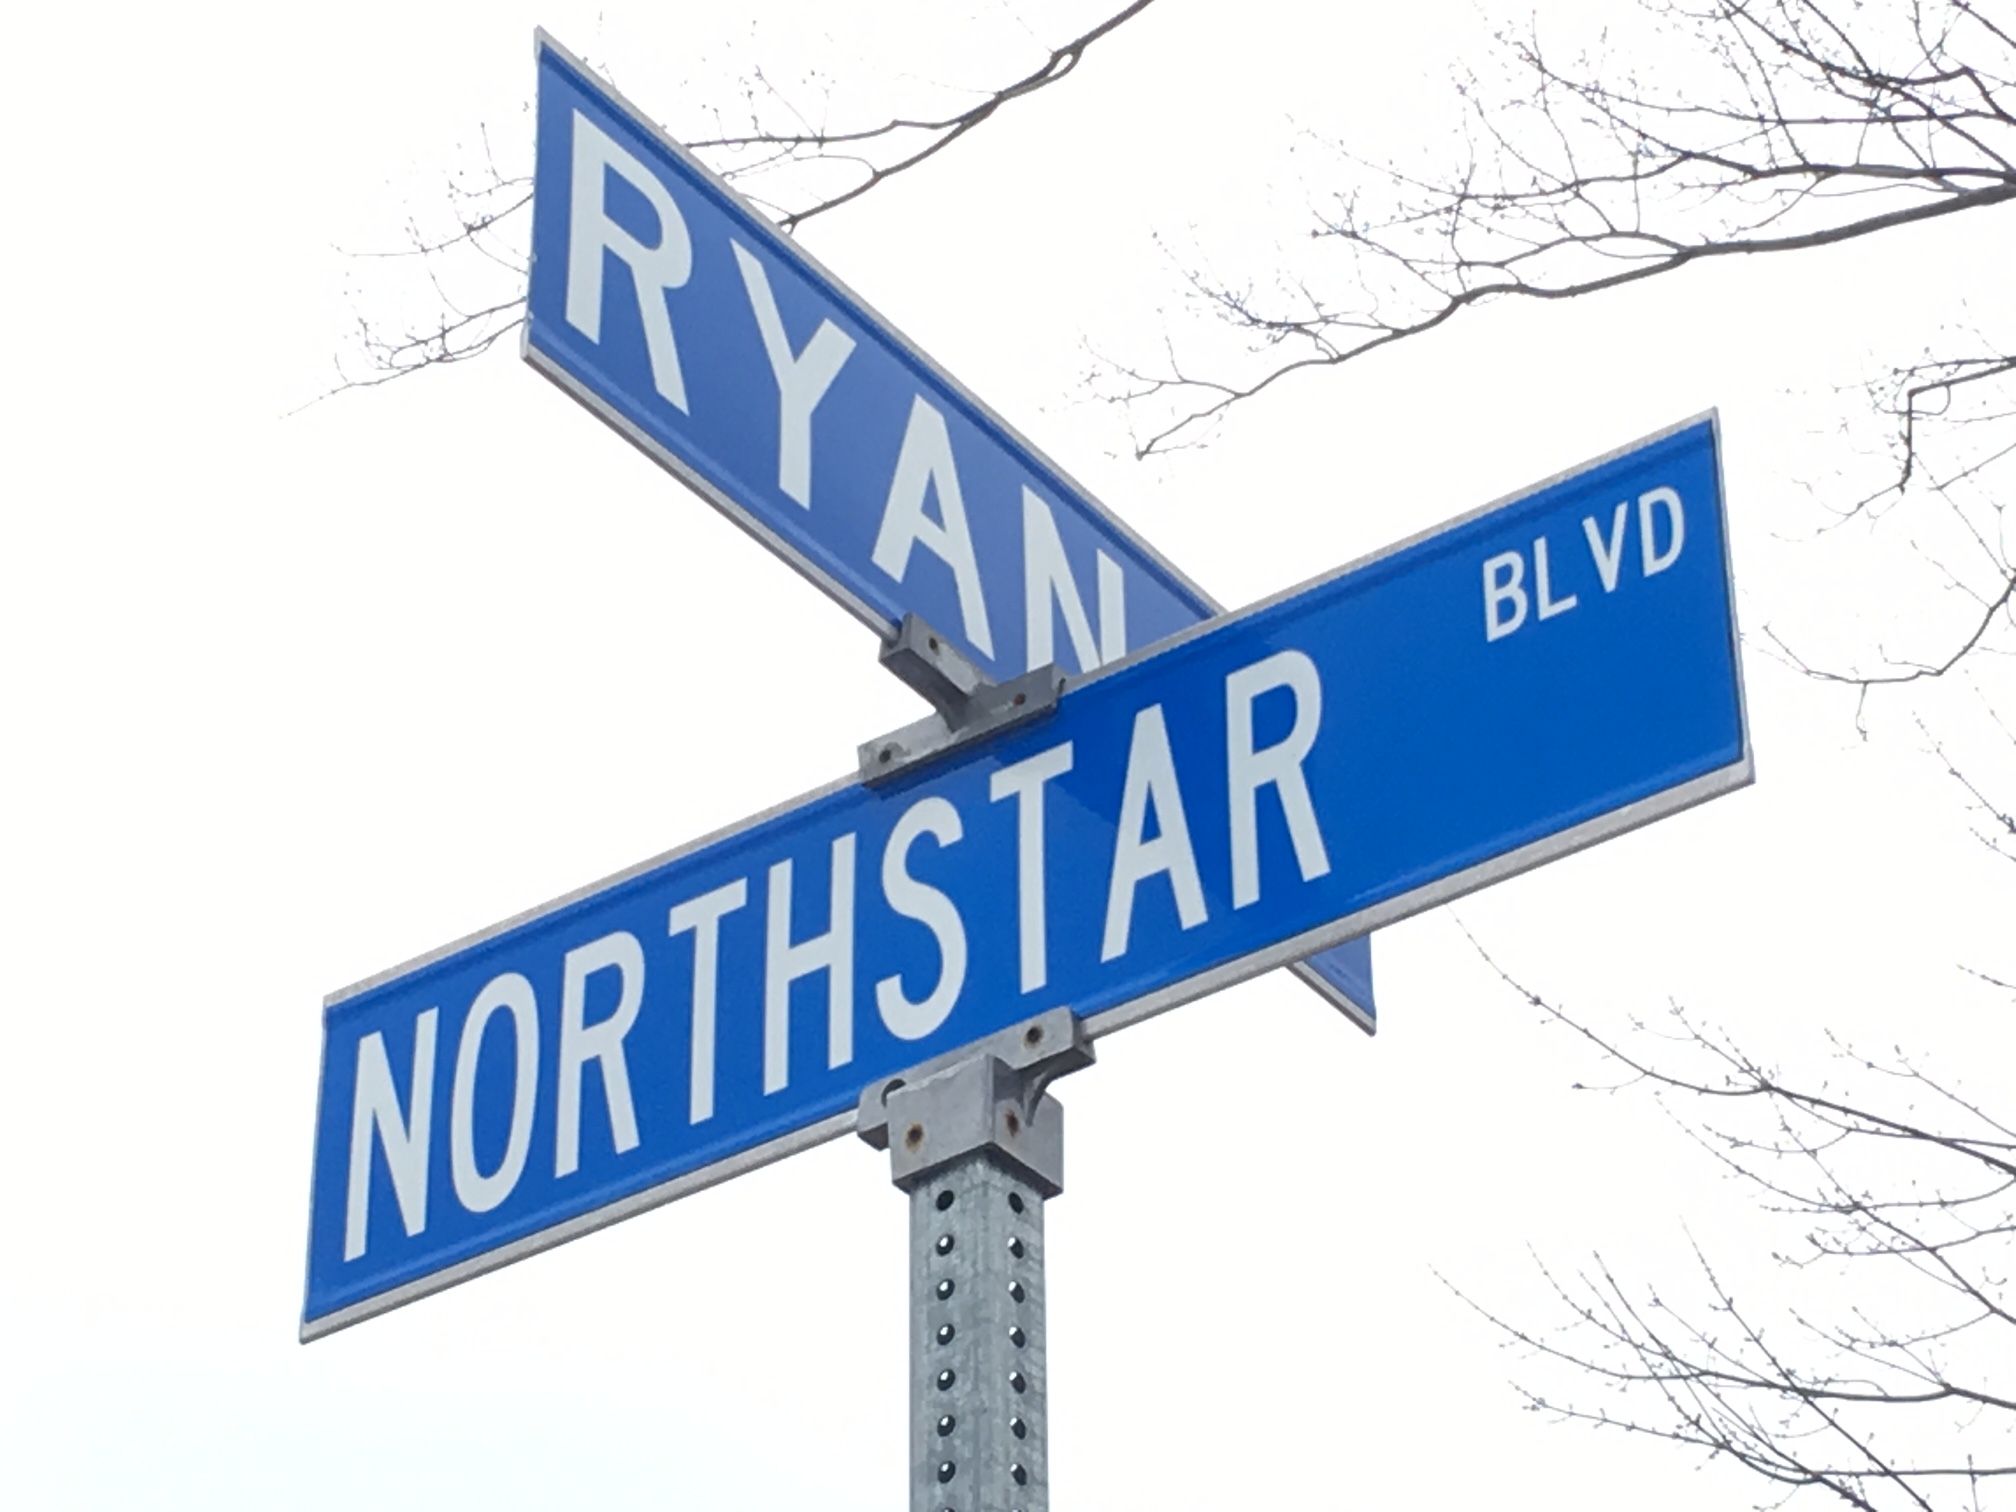 ryan northstar